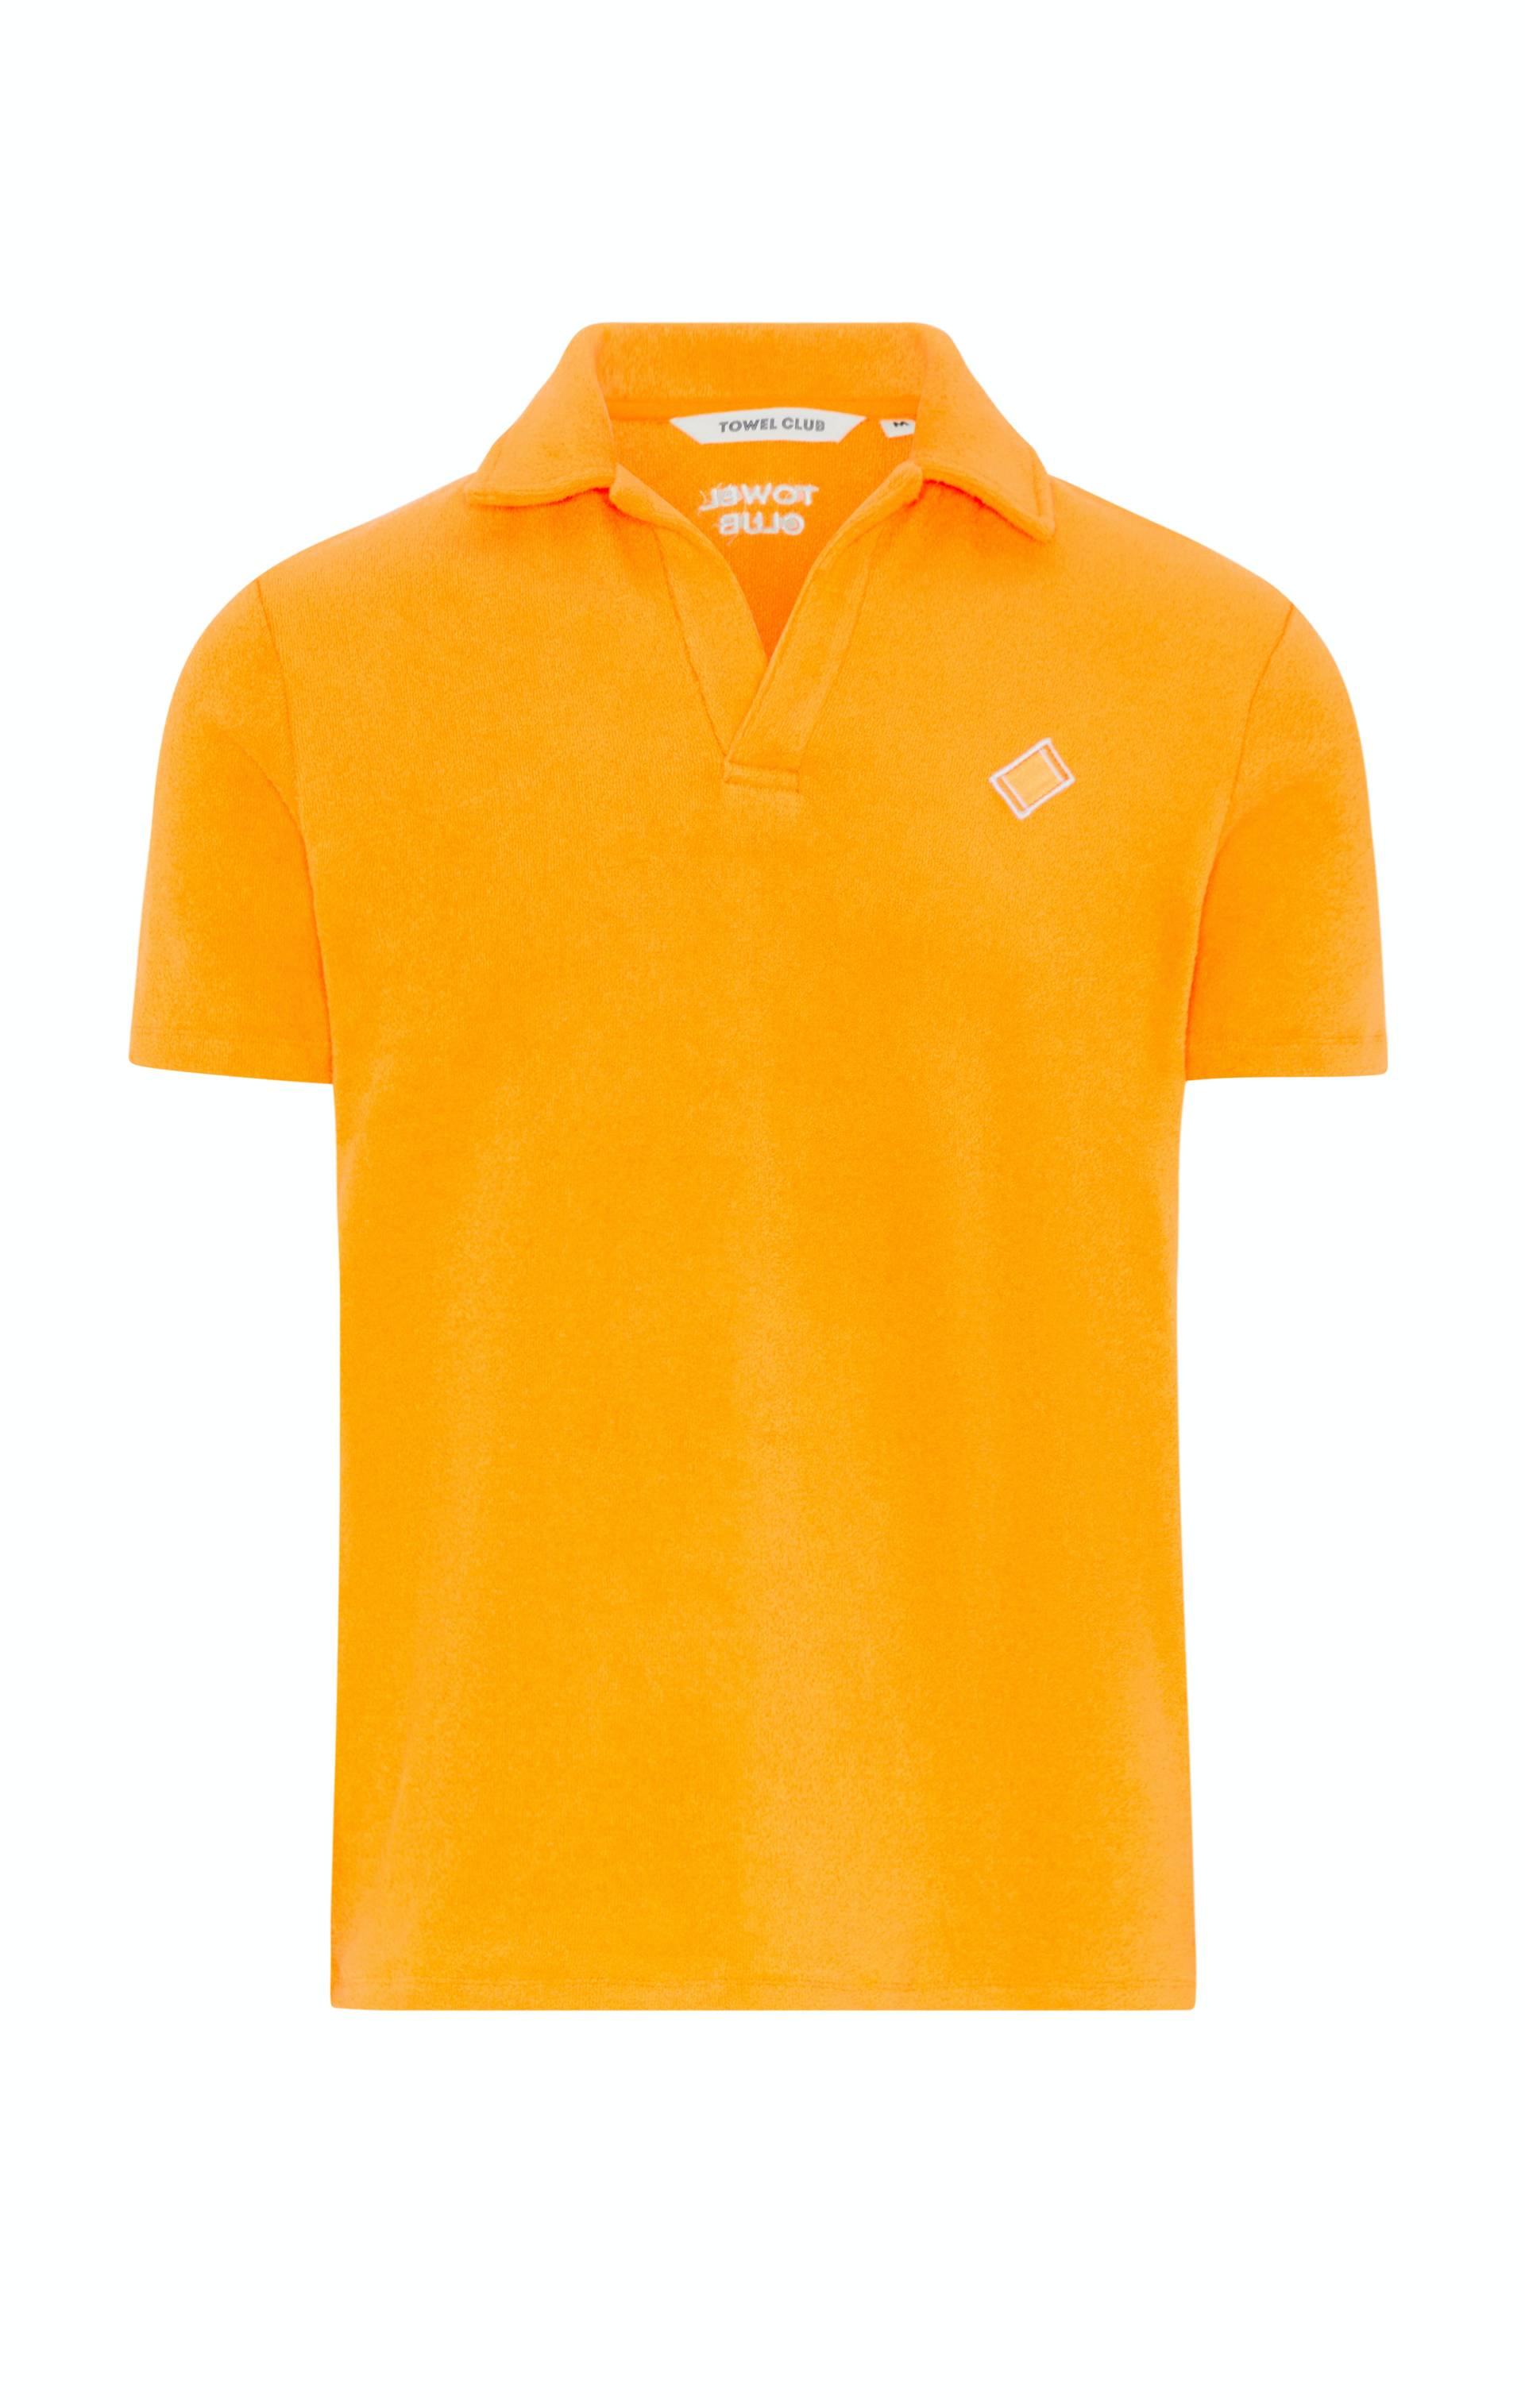 Onepiece Towel Club Piquet Shirt Orange - 1